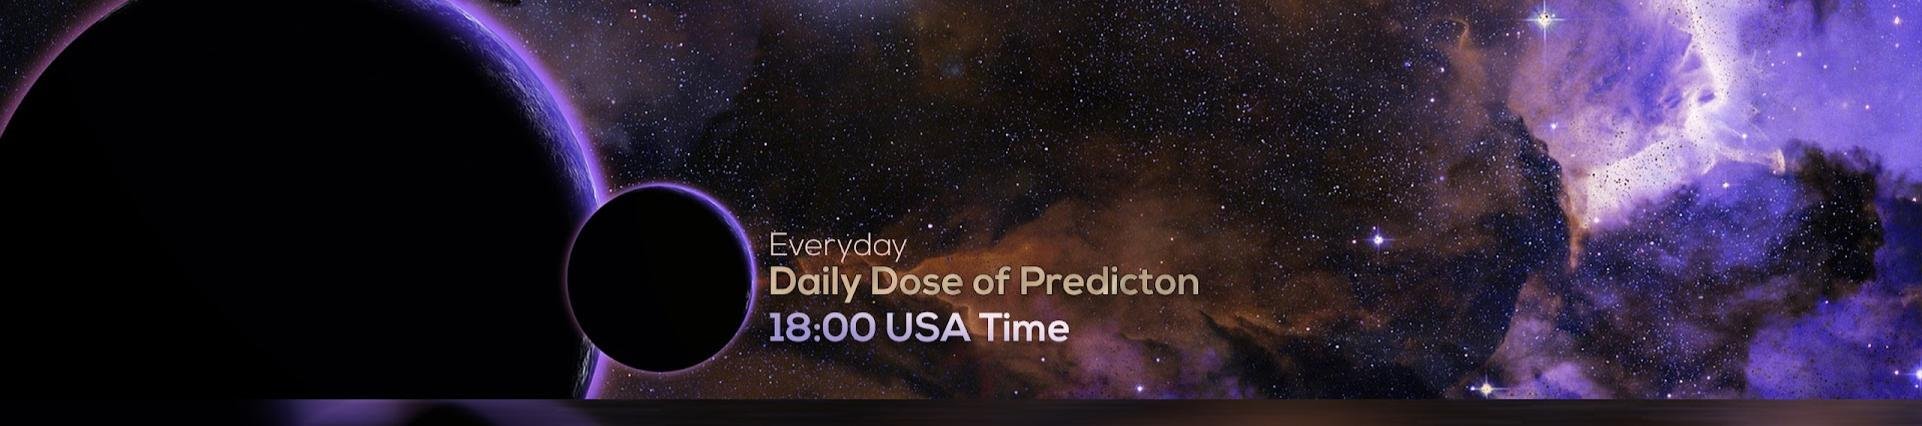 Daily Dose of Prediction